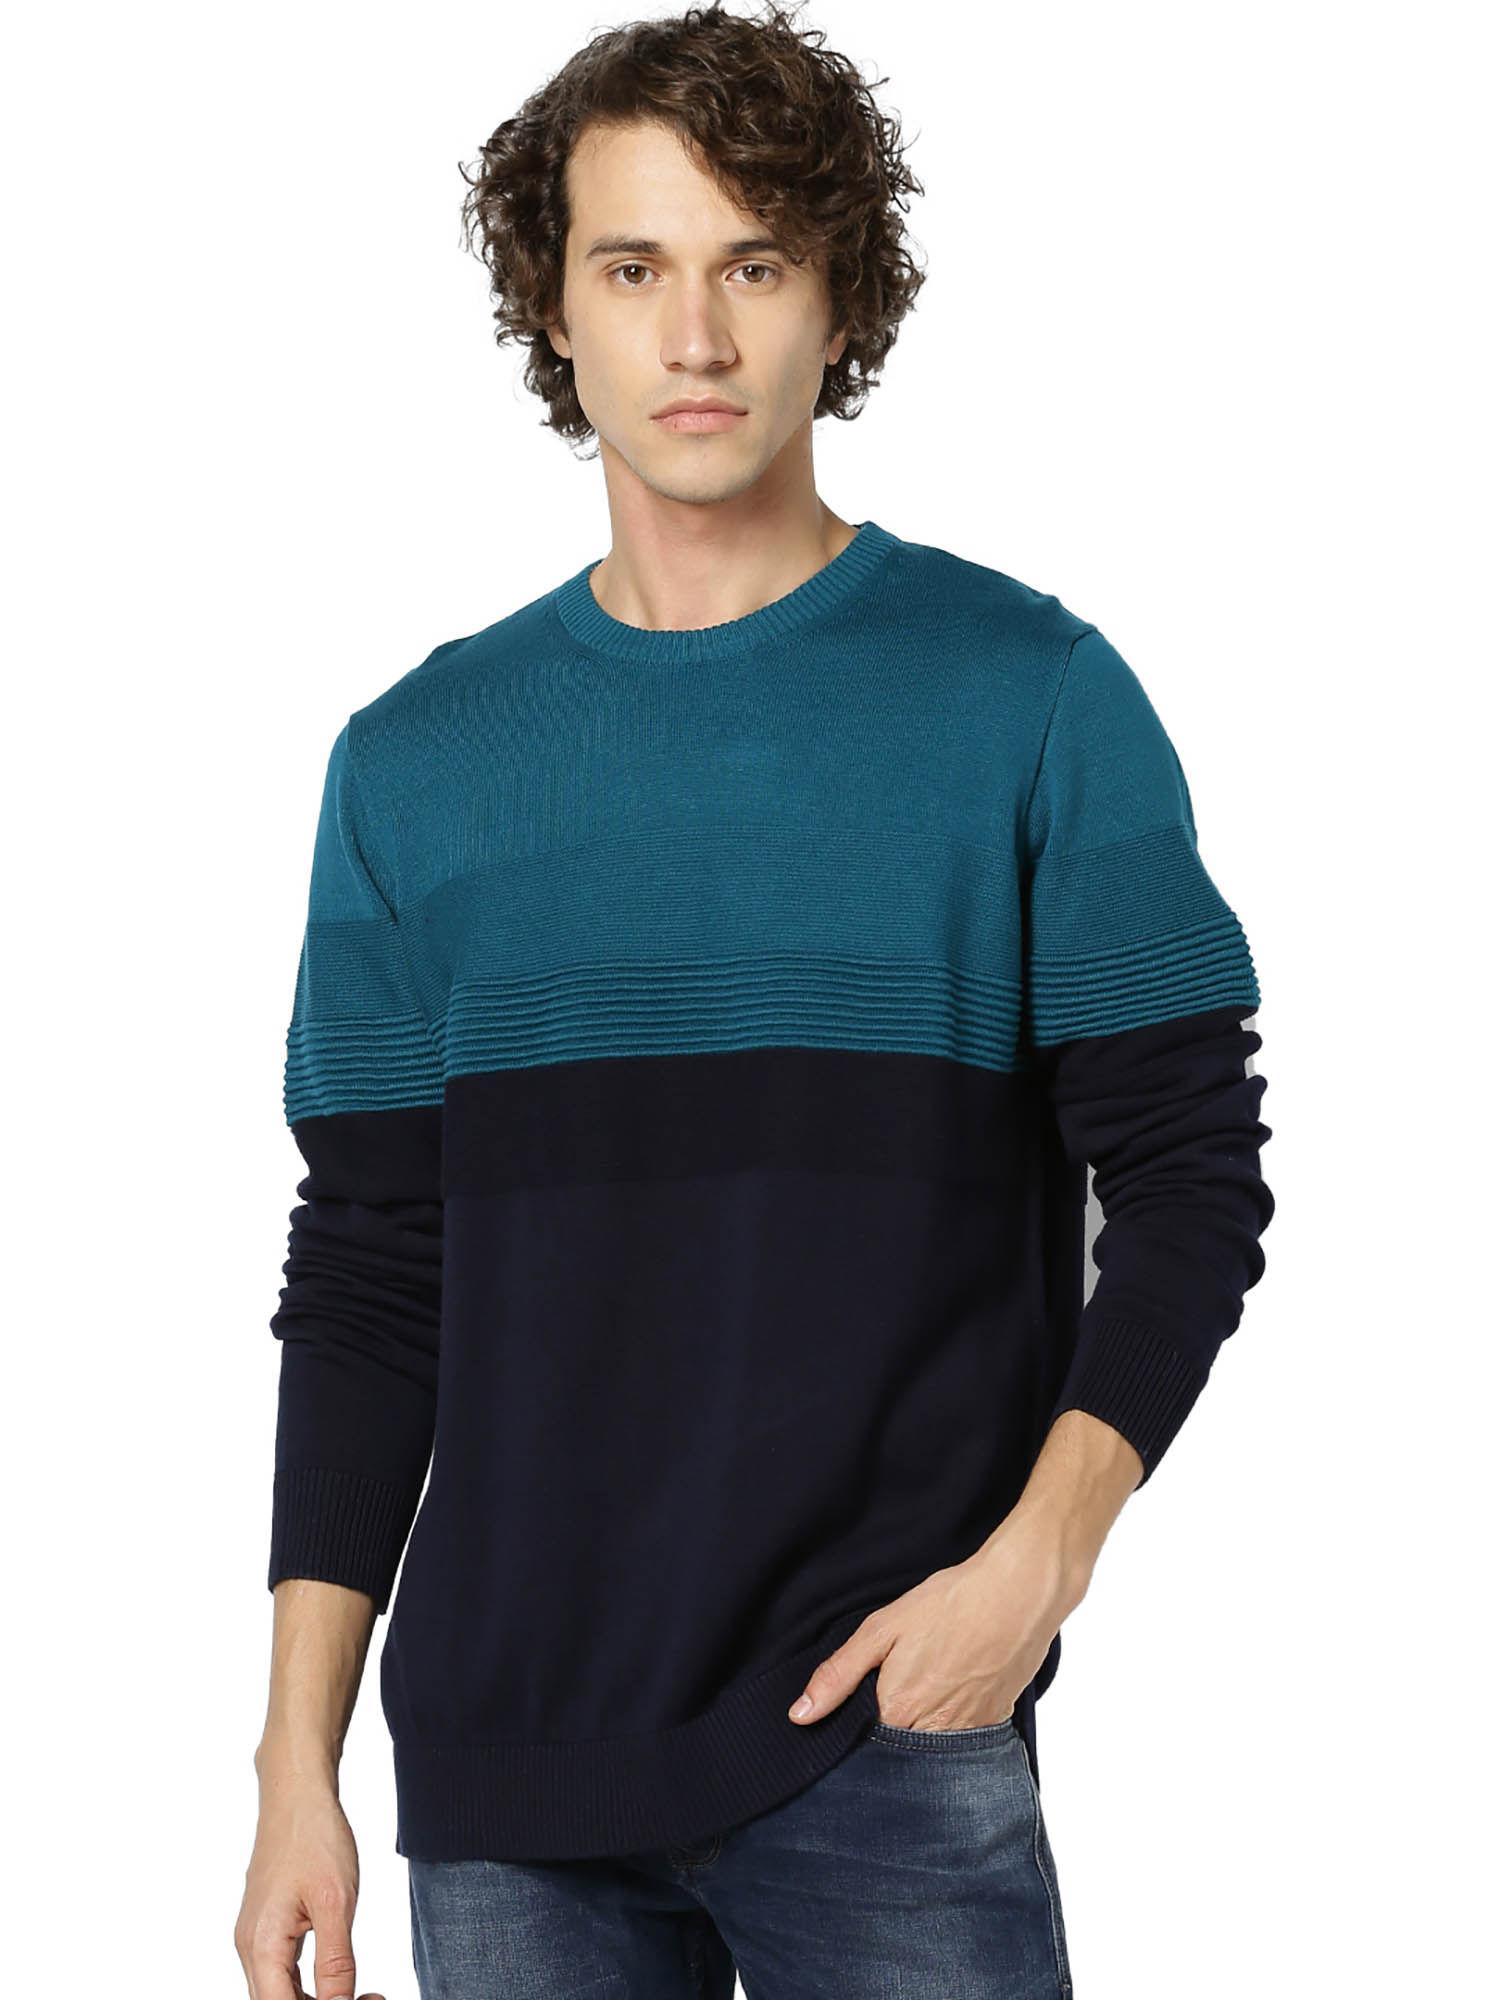 green-colorblock-sweater